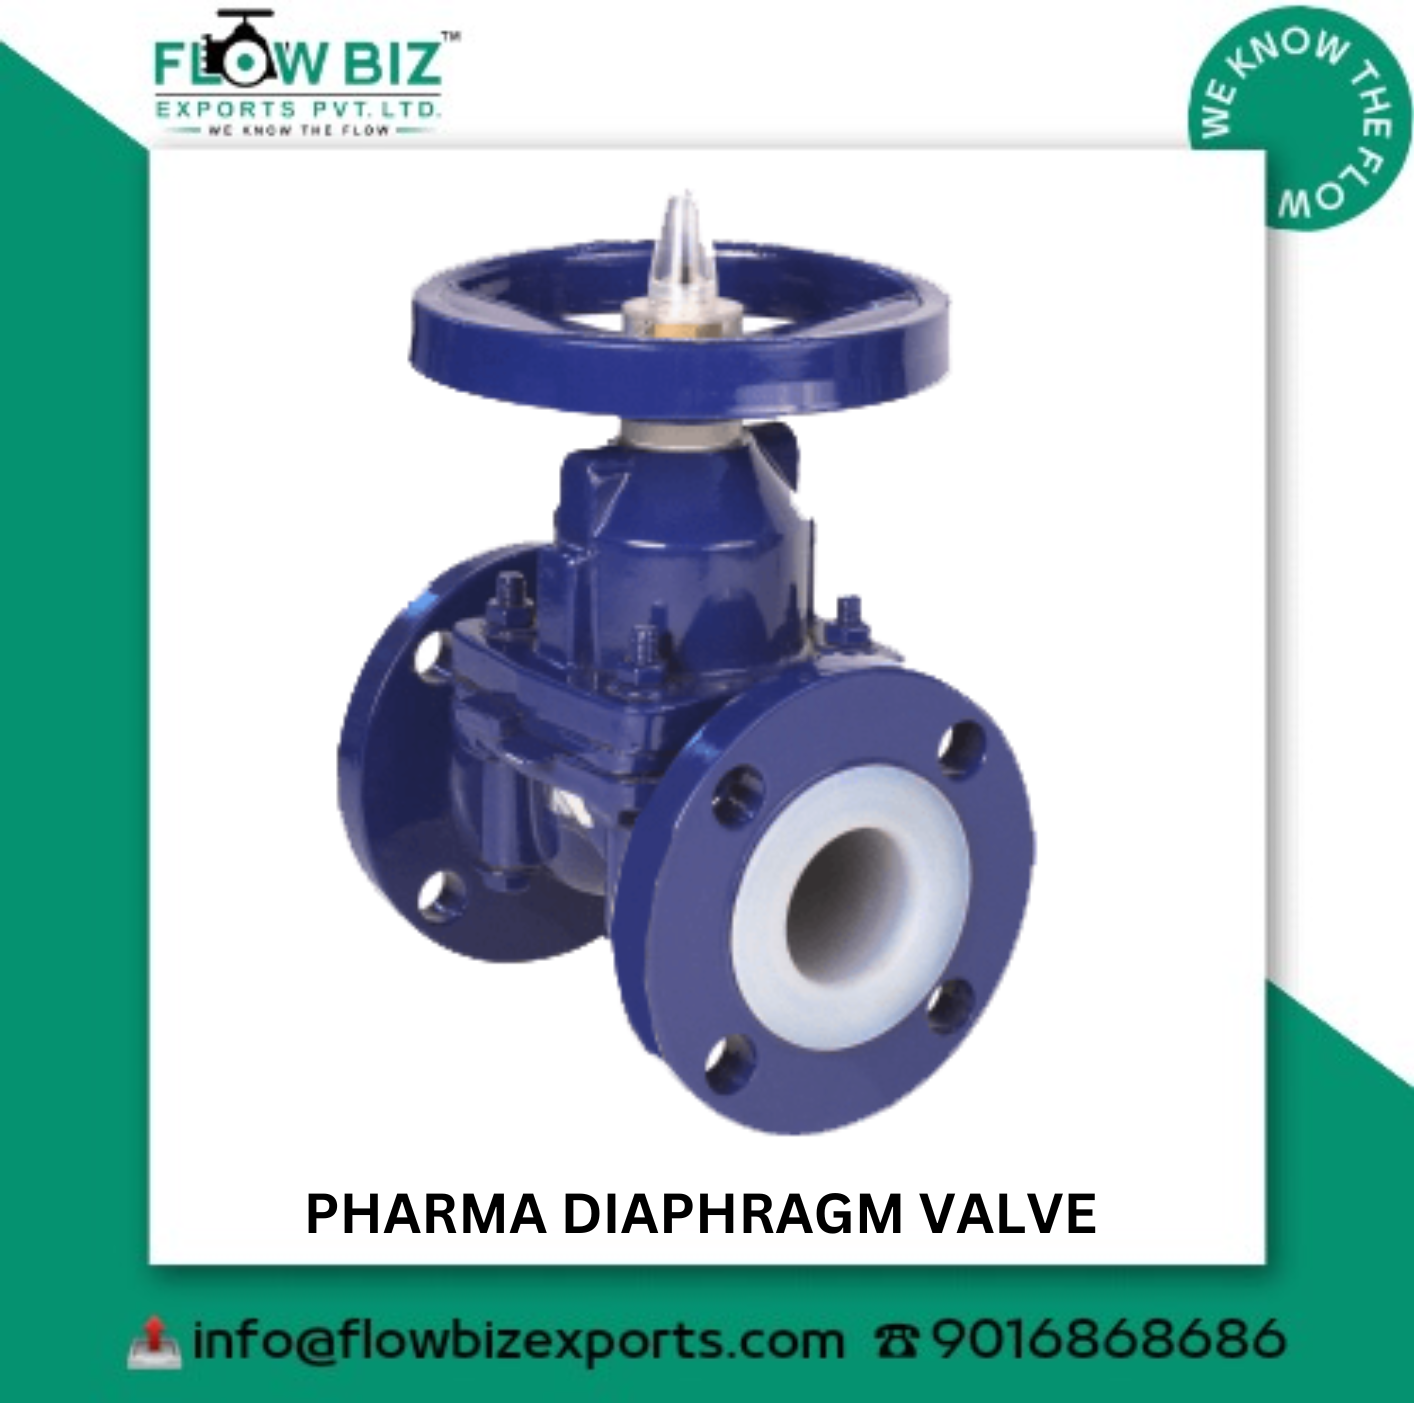 best quality pharma diaphragm valve manufacturer ahmedabad - Flowbiz